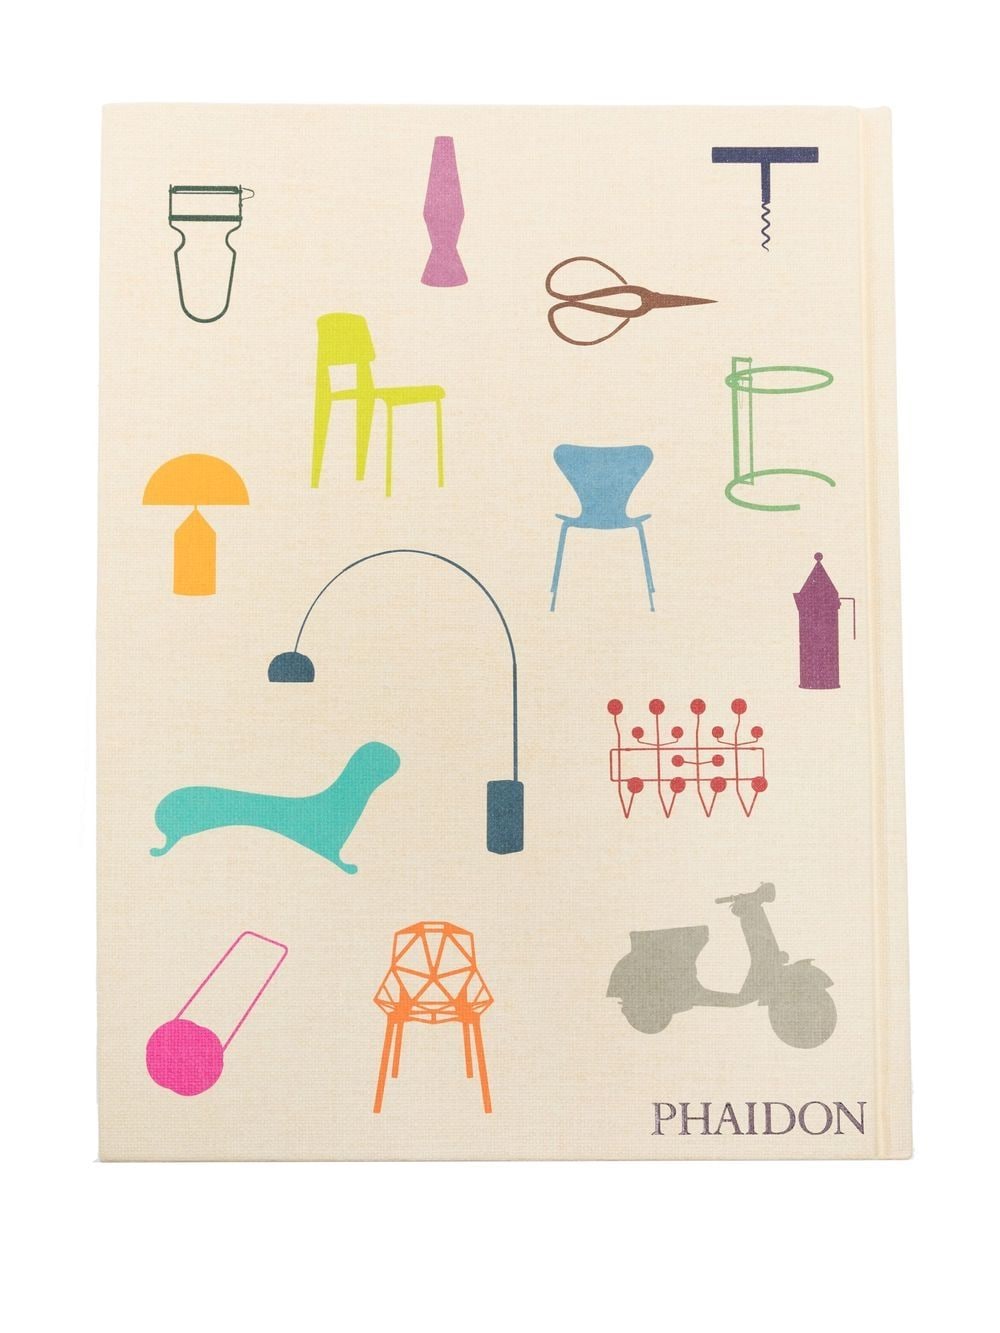 Phaidon Press 1000 Design Classics by Phaidon boek - Bruin